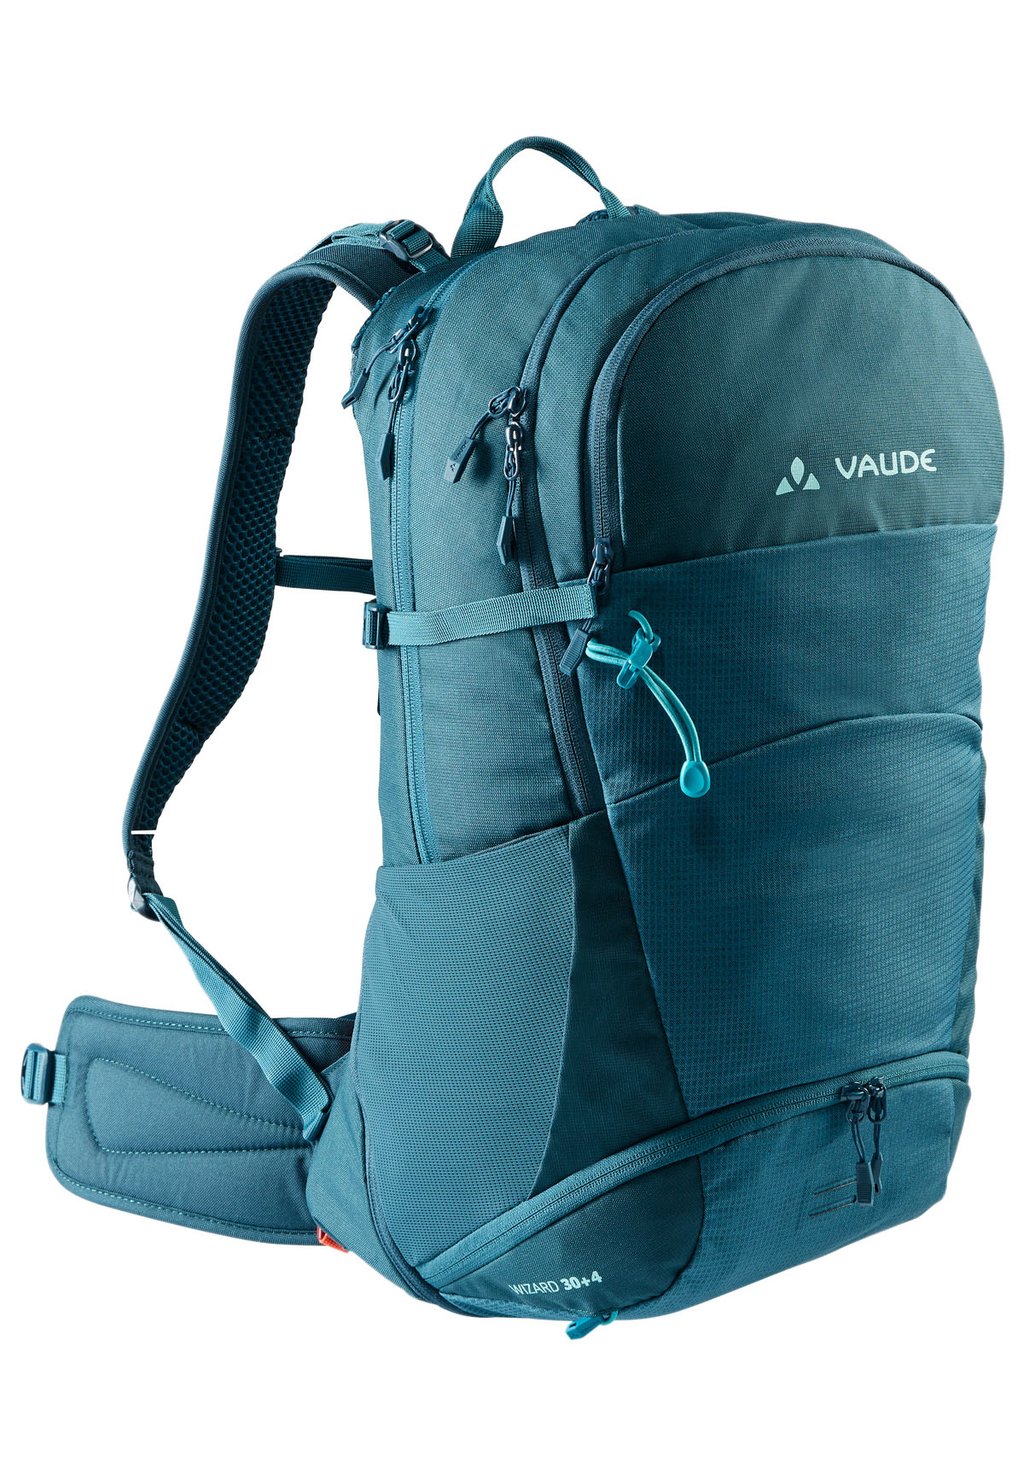 Треккинговый рюкзак WIZARD 30+4 Vaude, цвет blue sapphire